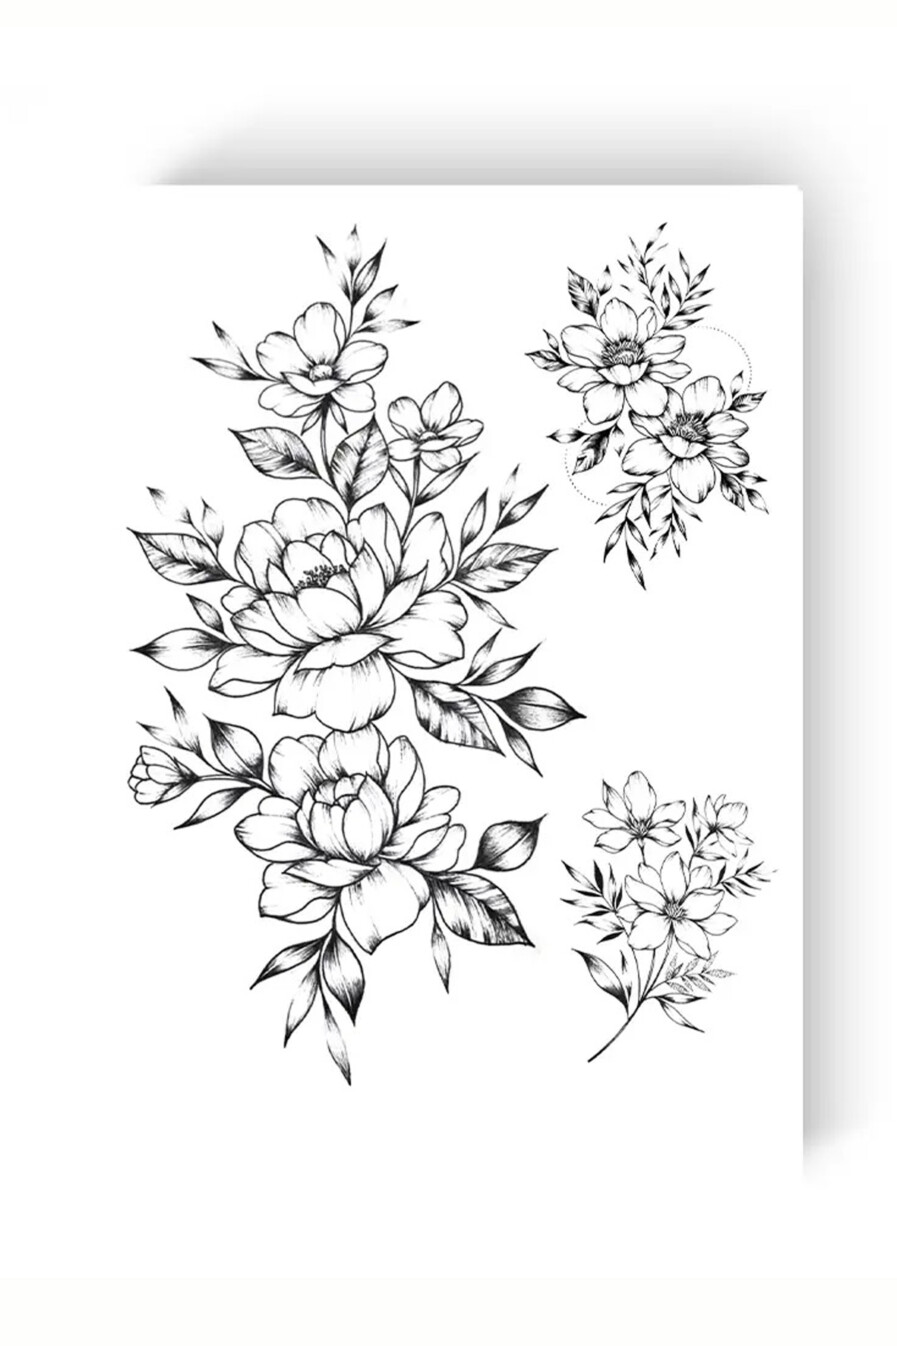 TATTOOSHKA Temporary Tattoo set, Flowers are perfection